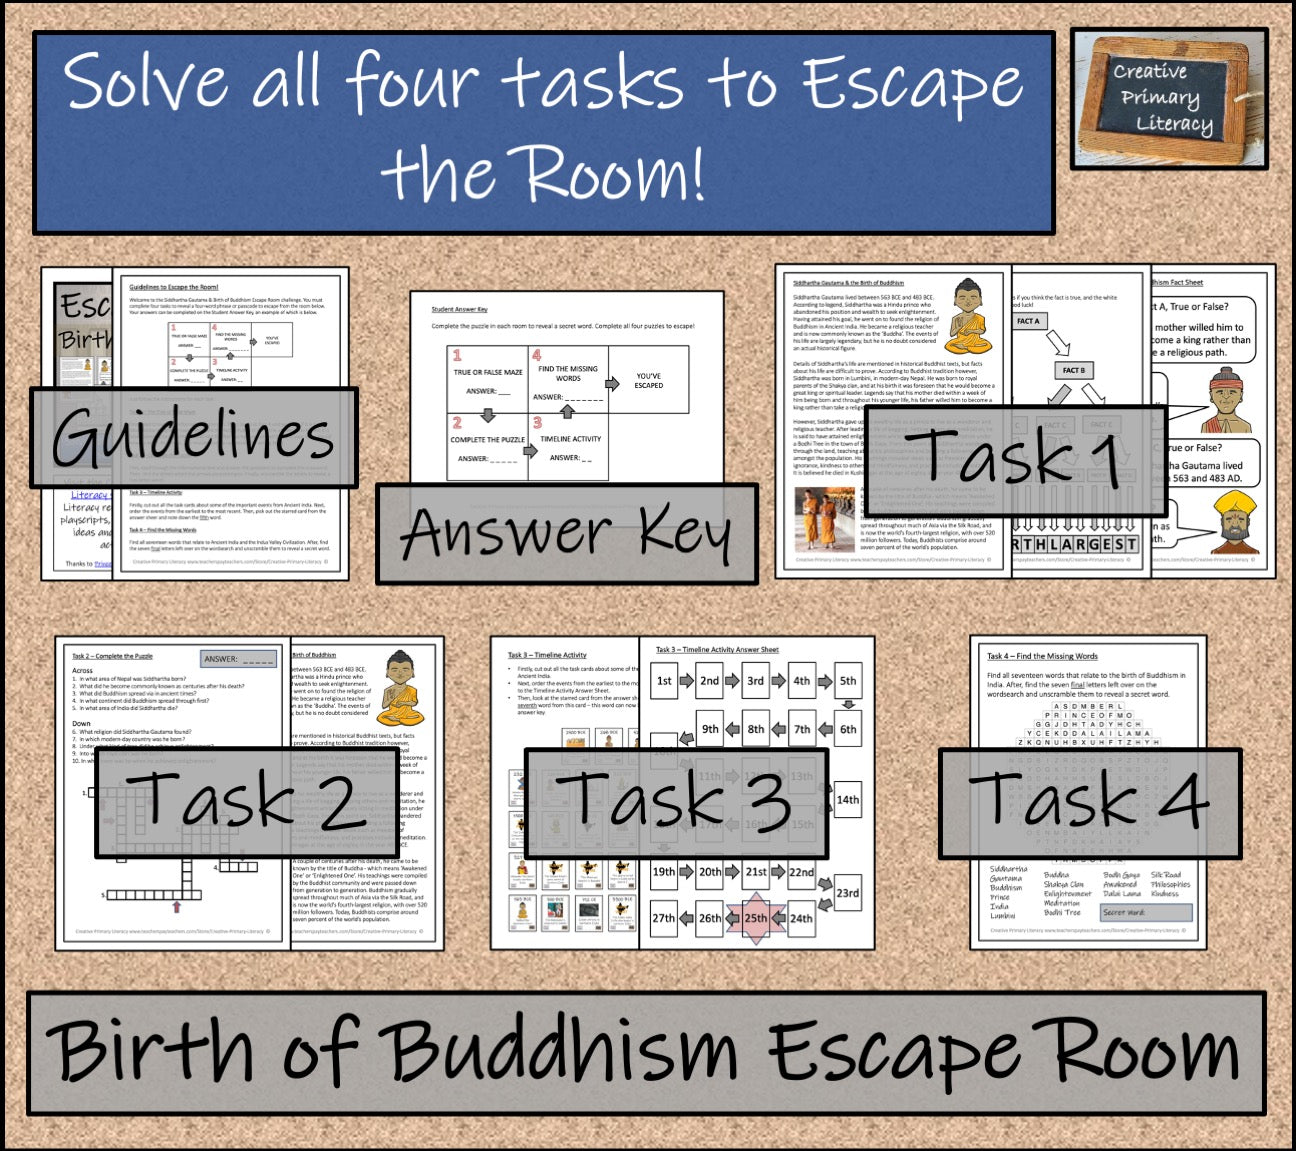 Siddhartha Gautama & the Birth of Buddhism Escape Room Activity